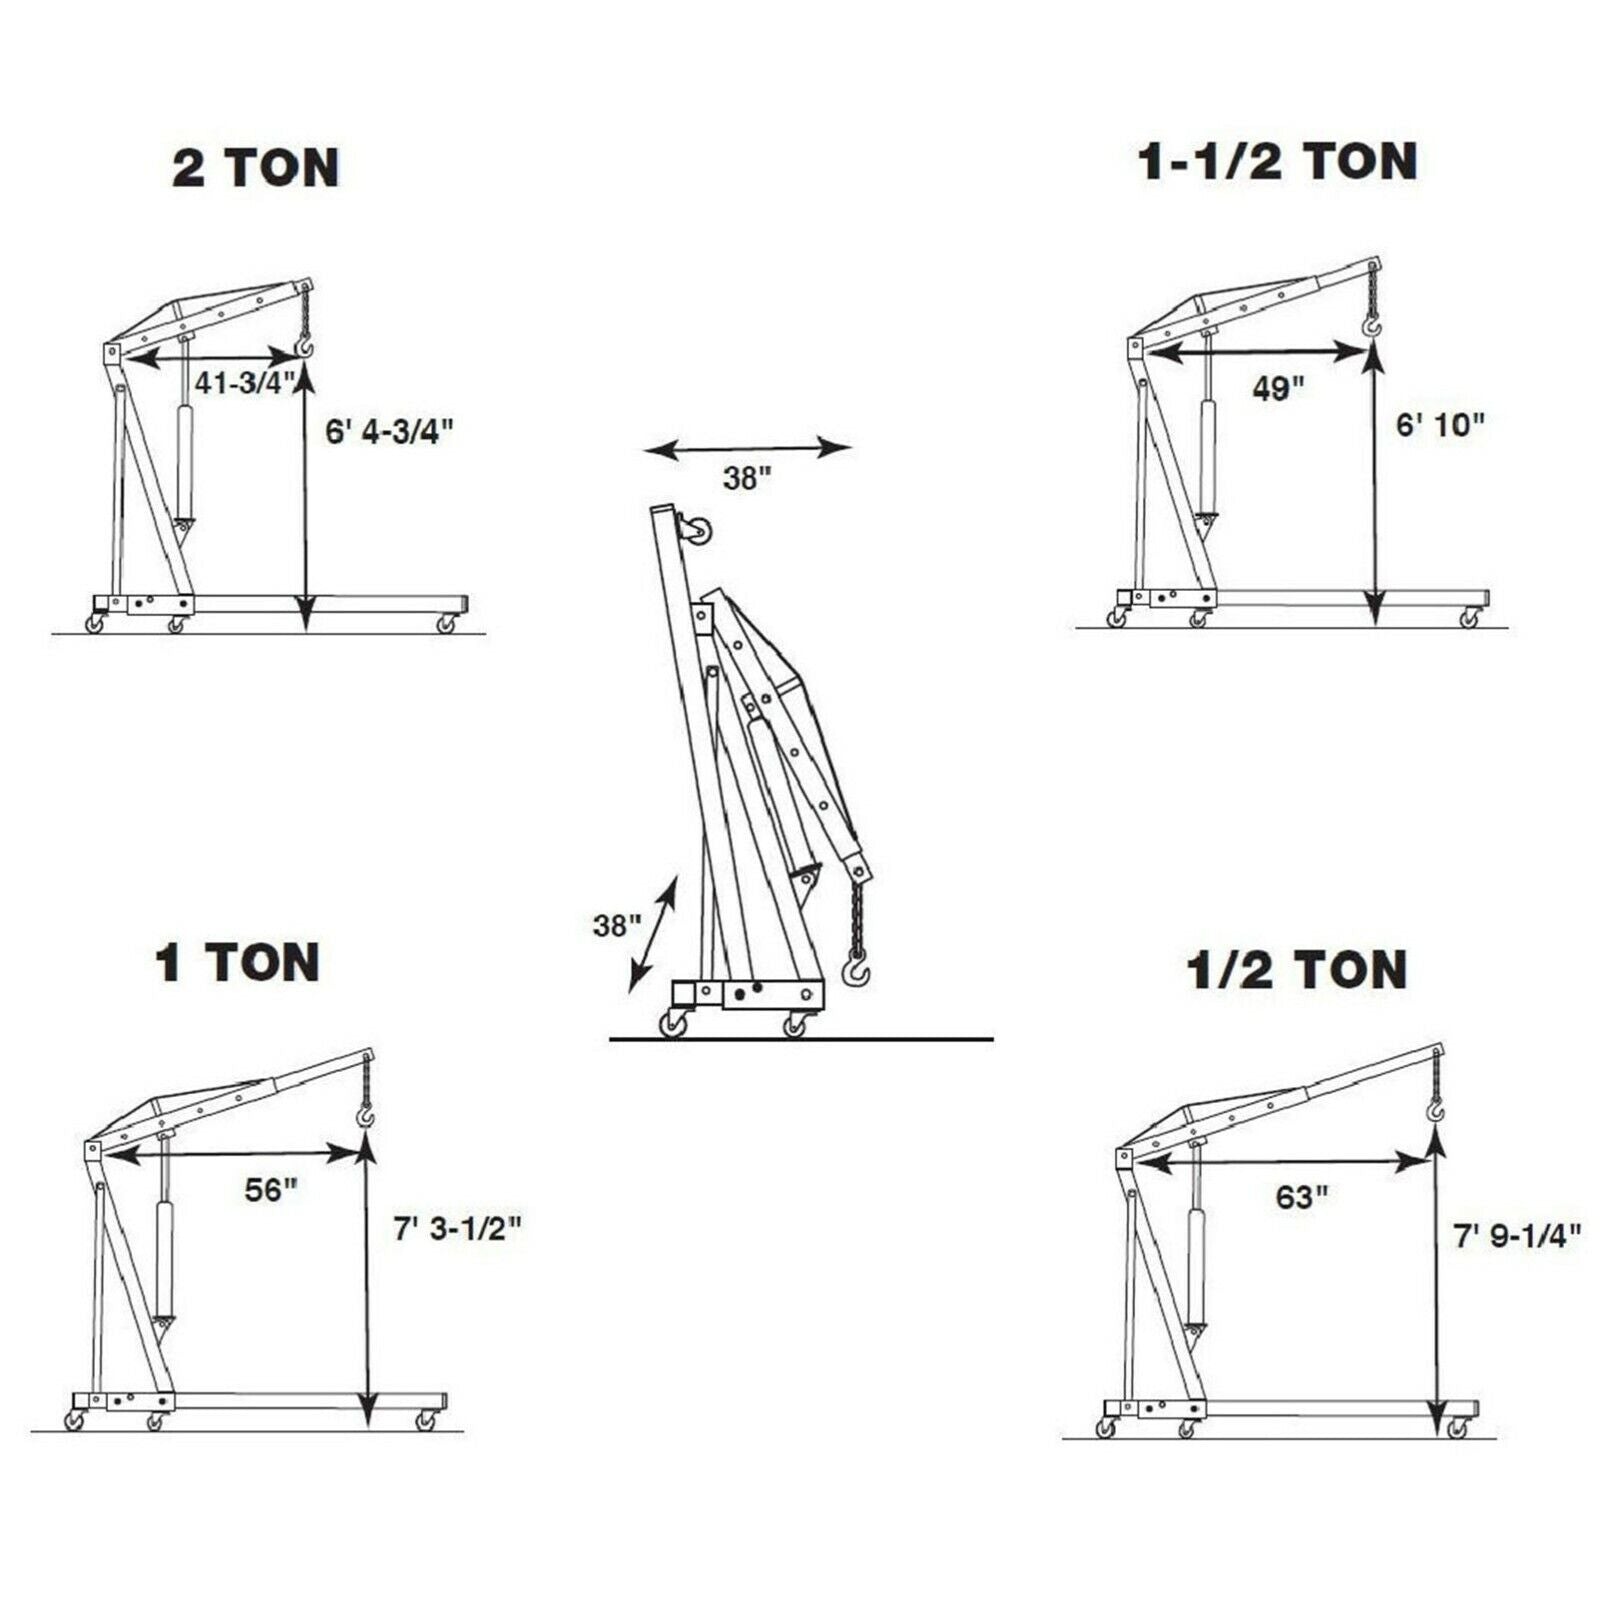 2 Ton Hydraulic Engine Crane Folding Hoist Stand Mobile Lifter